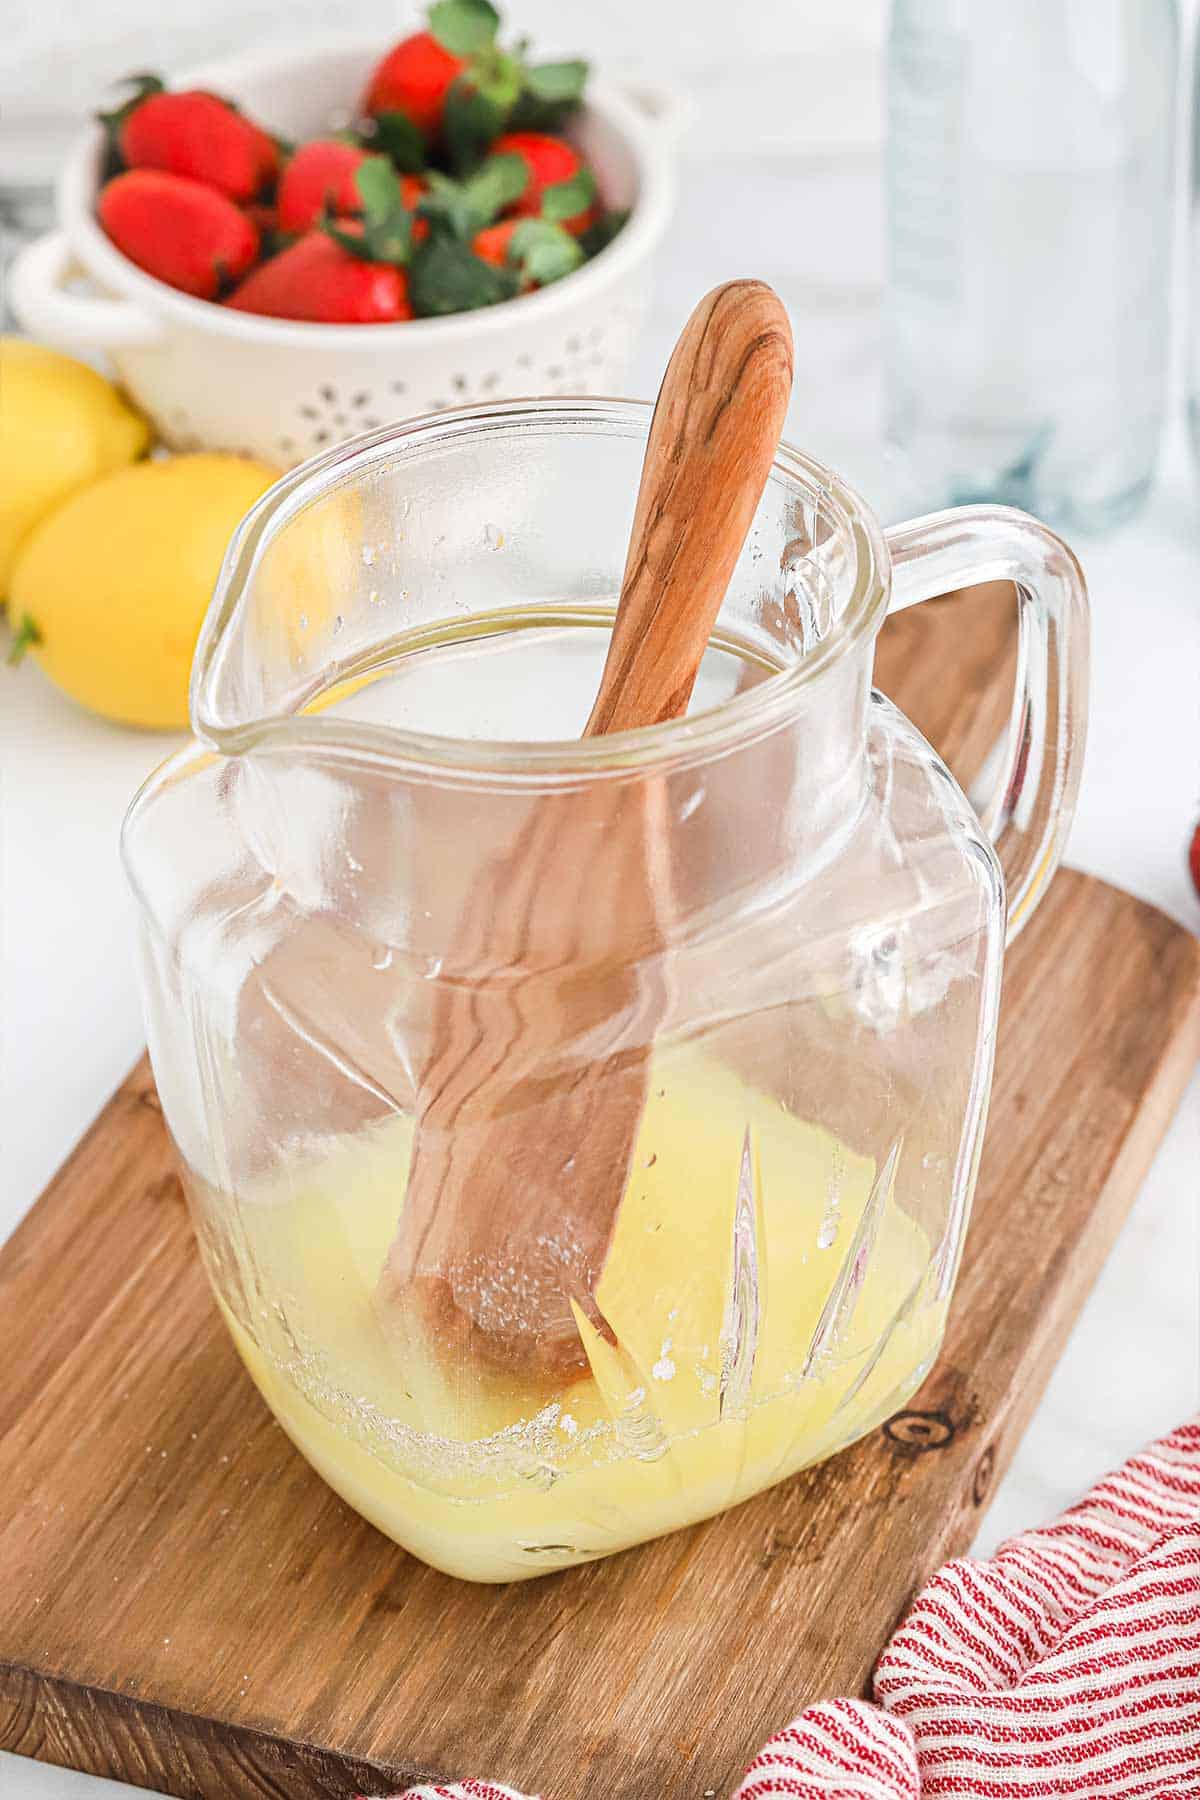 Lemon juice in a pitcher to make homemade lemonade.